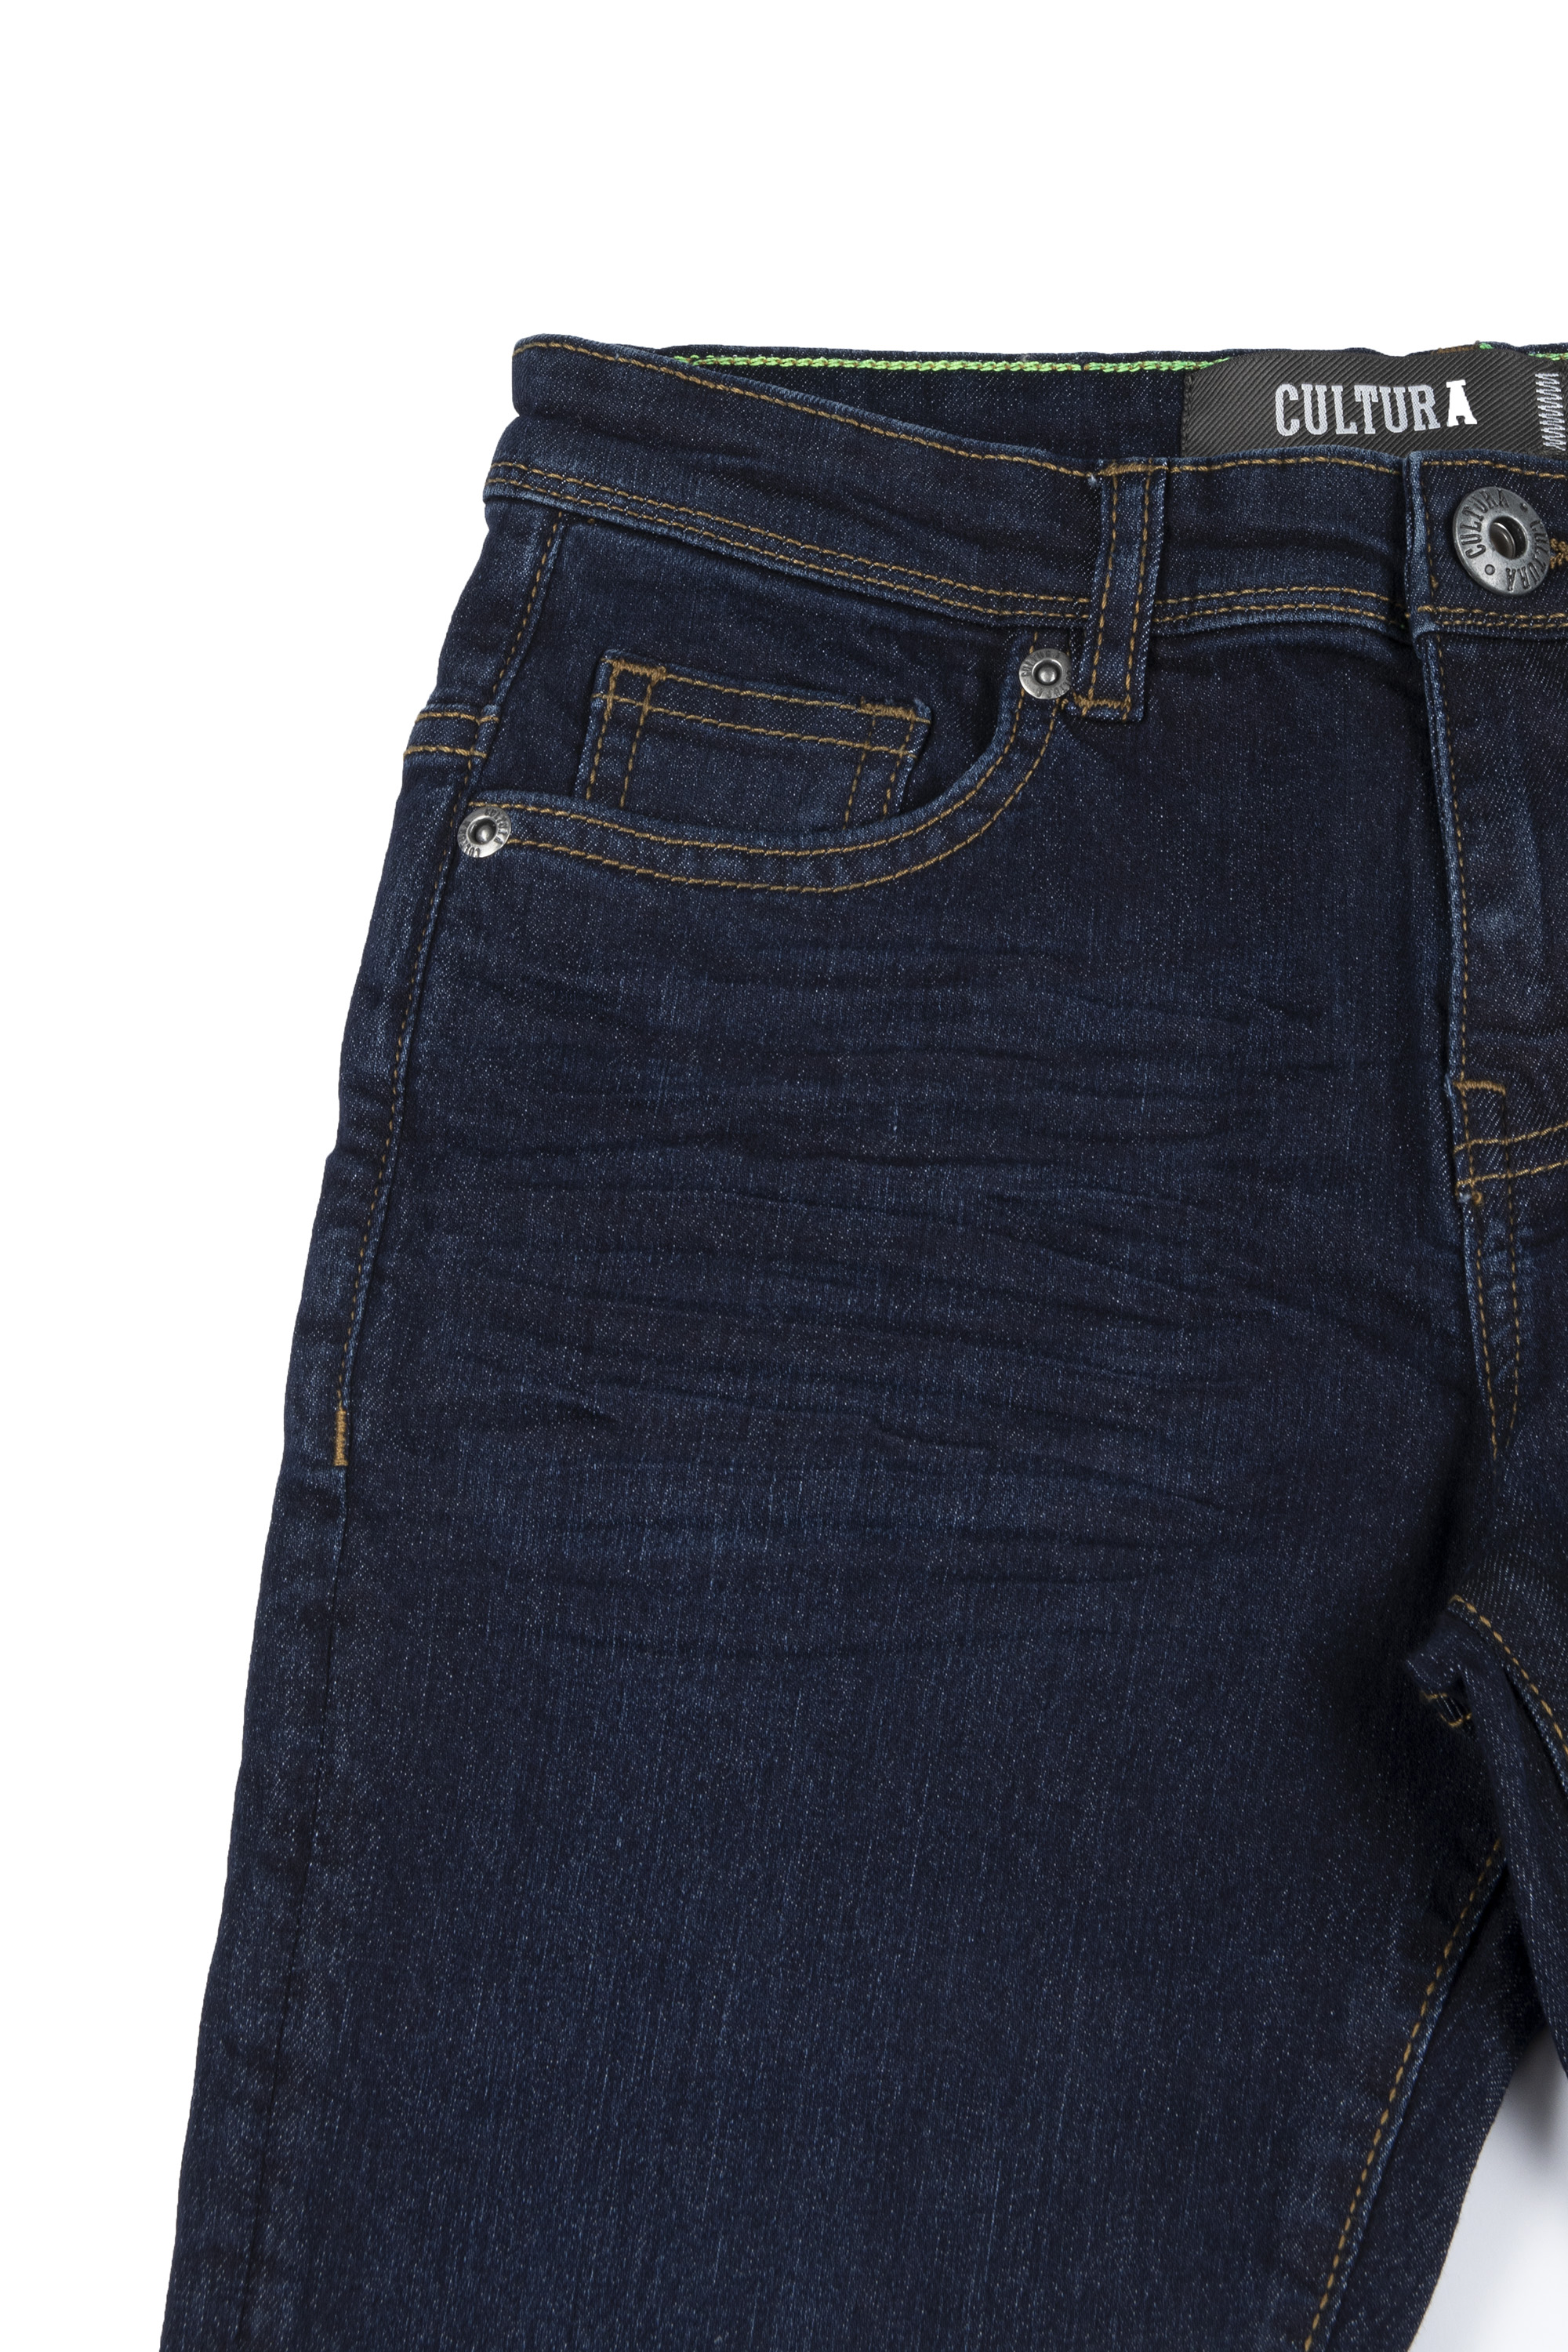 CULTURA Skinny 3-7, Size Comfy Little Wash Jeans 5 Denim Slim Age Dark Stitch, Boys Blue for Accent Pants, Stretch